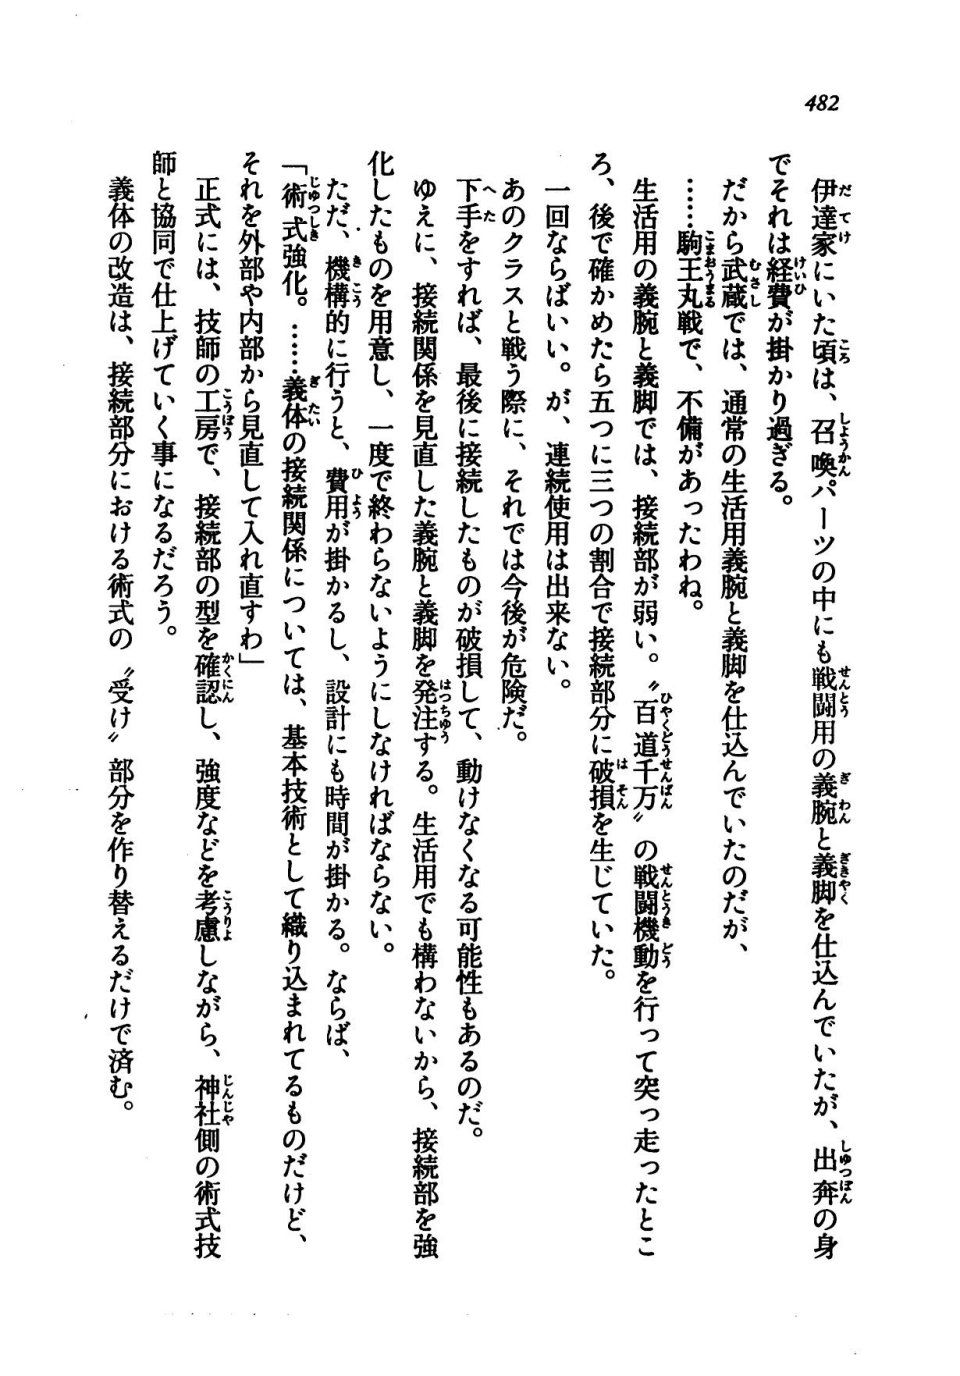 Kyoukai Senjou no Horizon LN Vol 21(8C) Part 1 - Photo #481